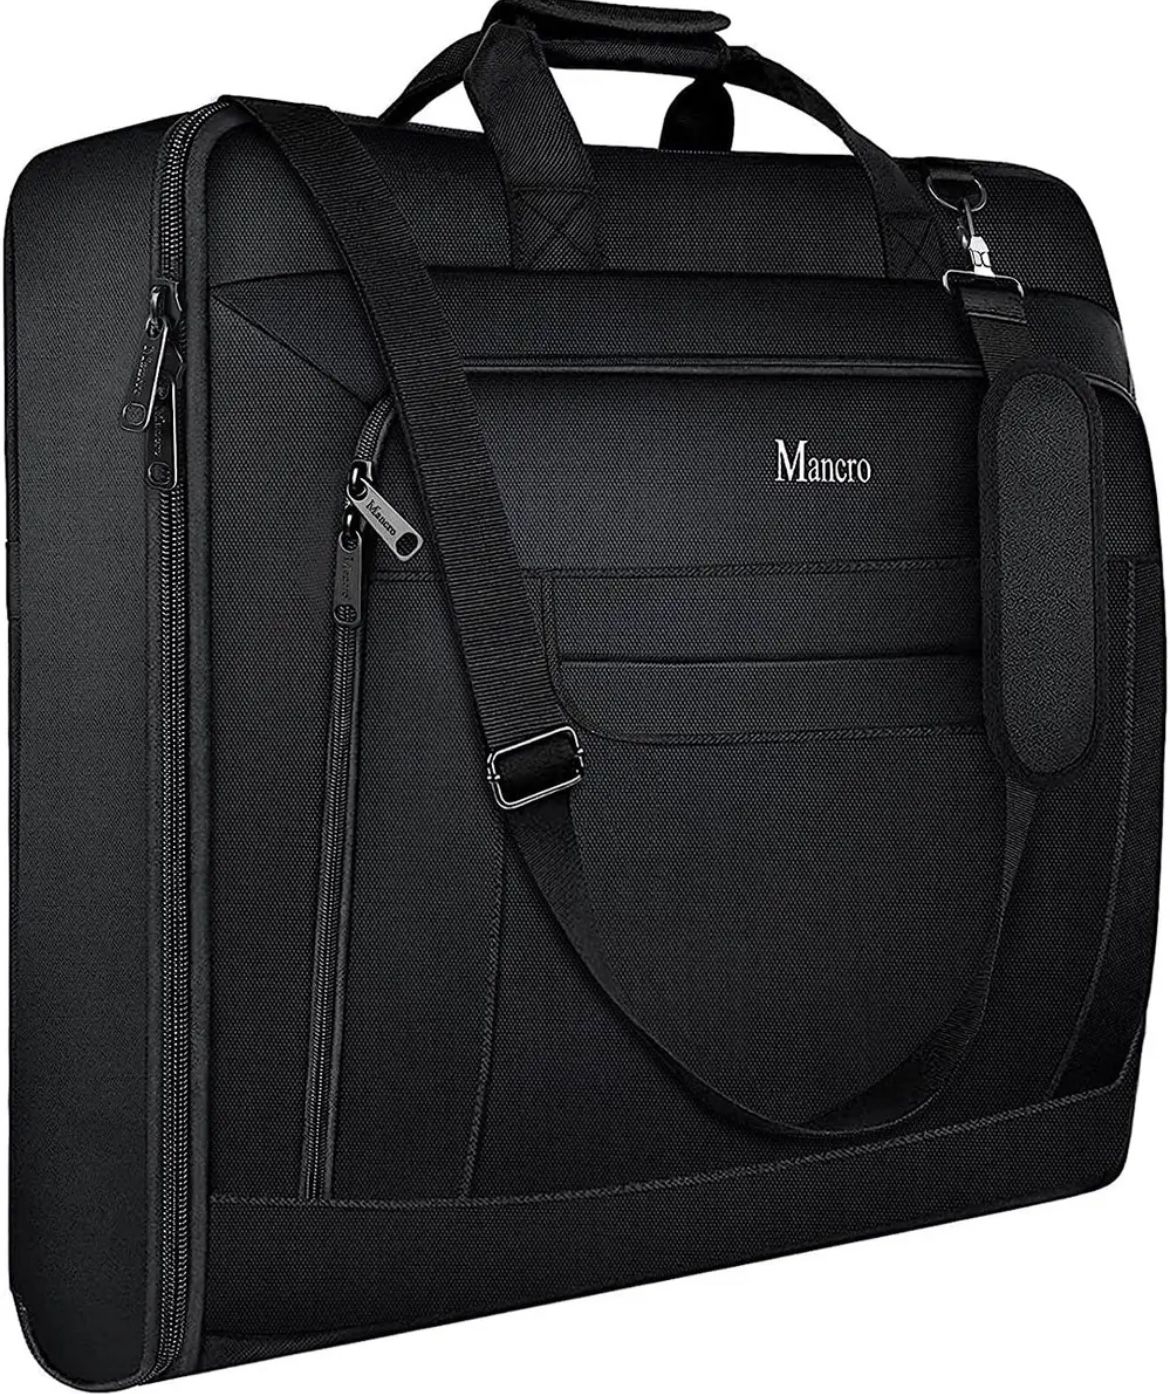 MANCRO Travel Garment Bag Black Shoulder Strap & Back Strap Zipper Closure